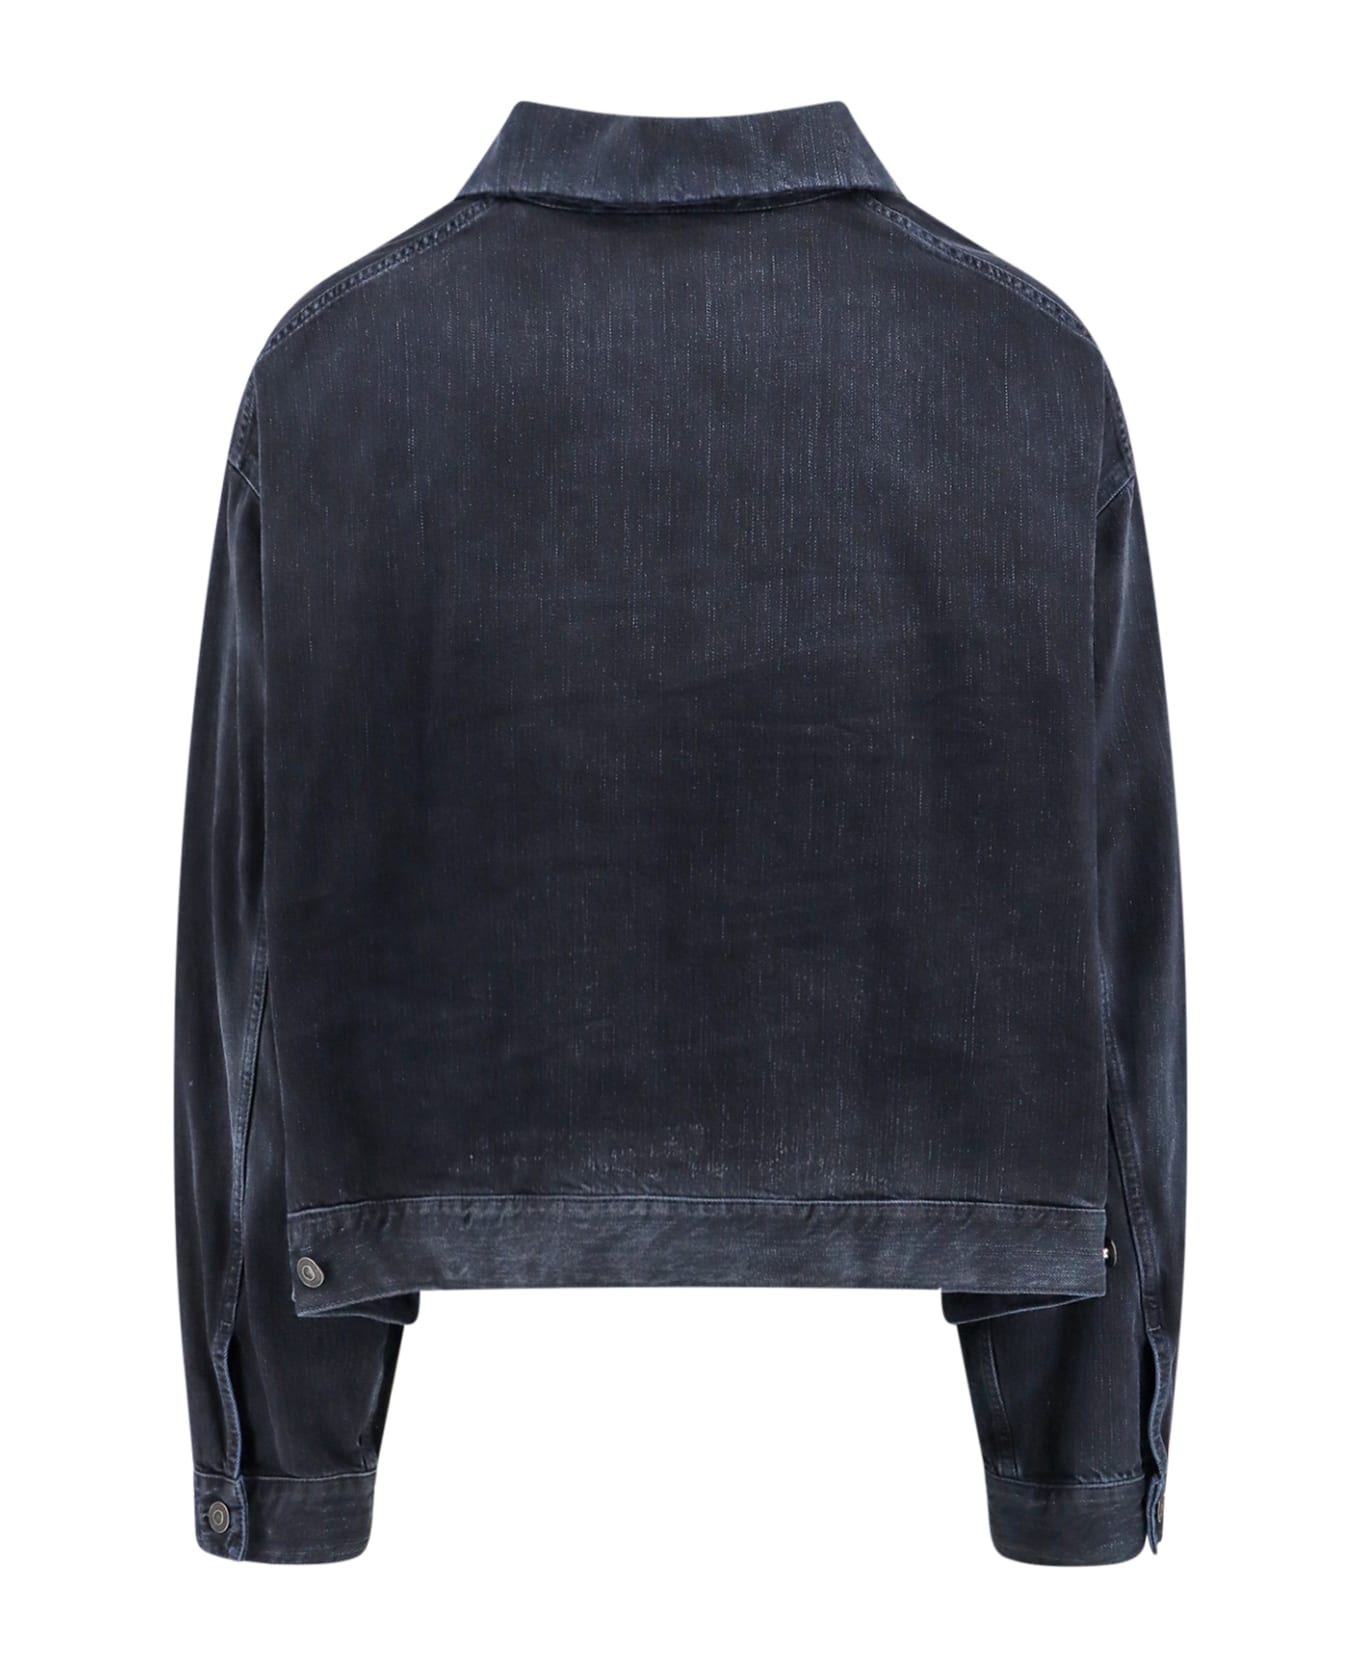 Balenciaga Jacket - Black